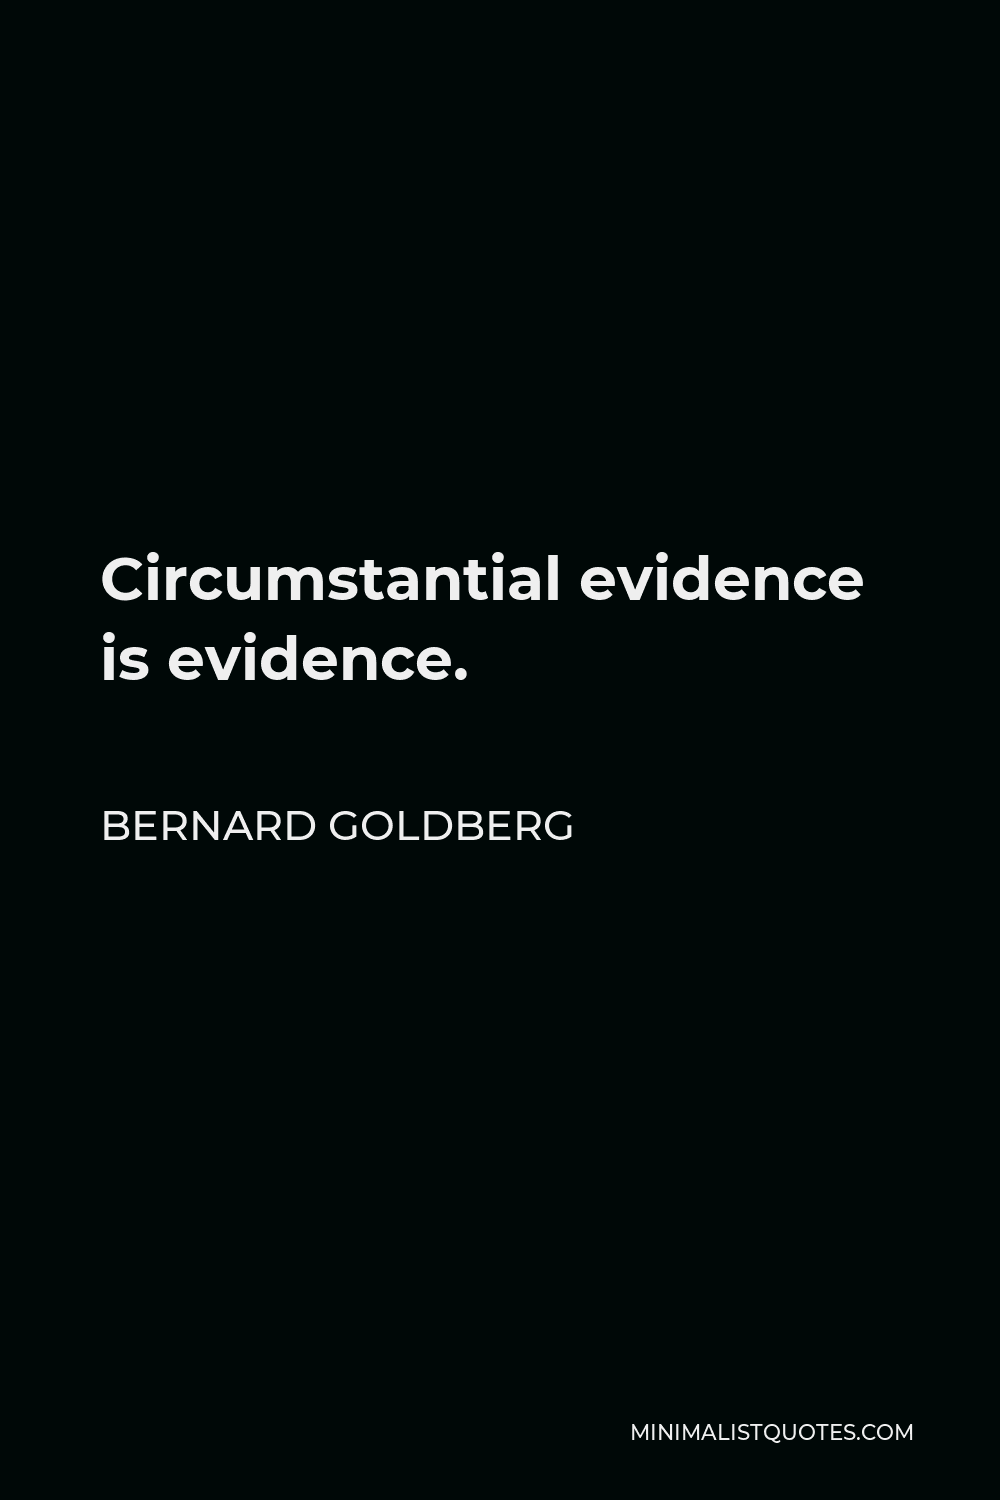 Bernard Goldberg Quote - Circumstantial evidence is evidence.